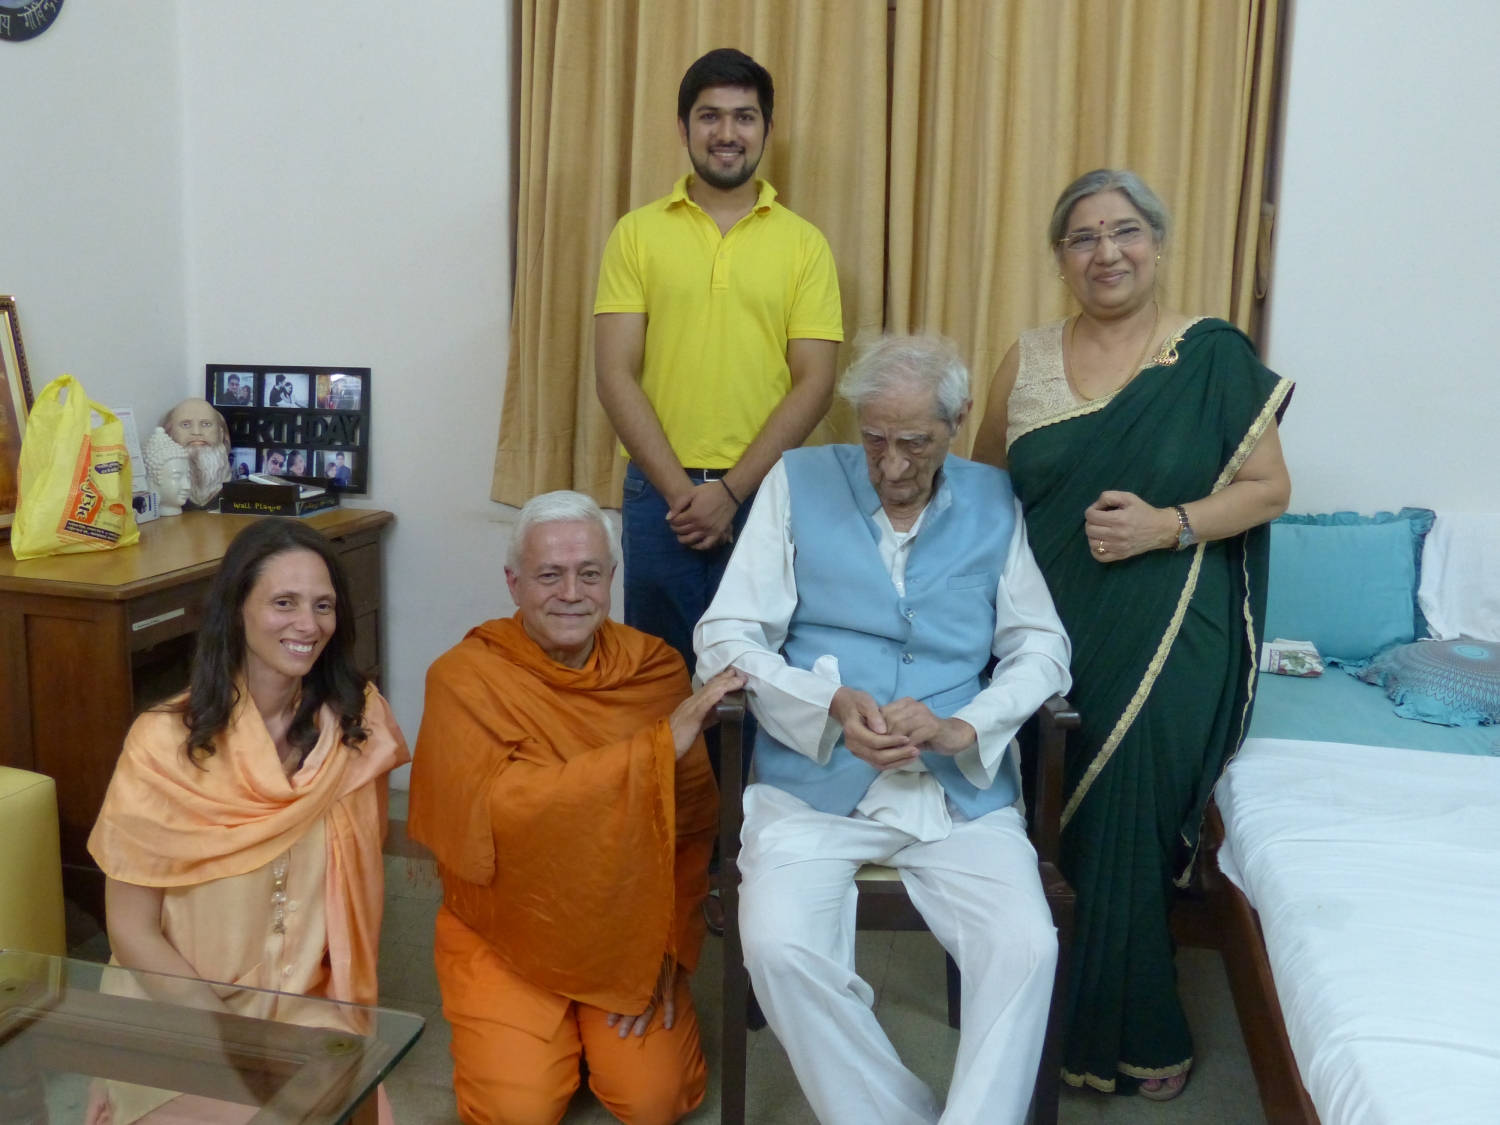 Encontro de H.H. Jagat Guru Amrta Sūryānanda Mahā Rāja com Dr. Jayadeva Yogendra - The Yoga Institute of Santa Cruz, Mumbai, Índia - 2016, Janeiro